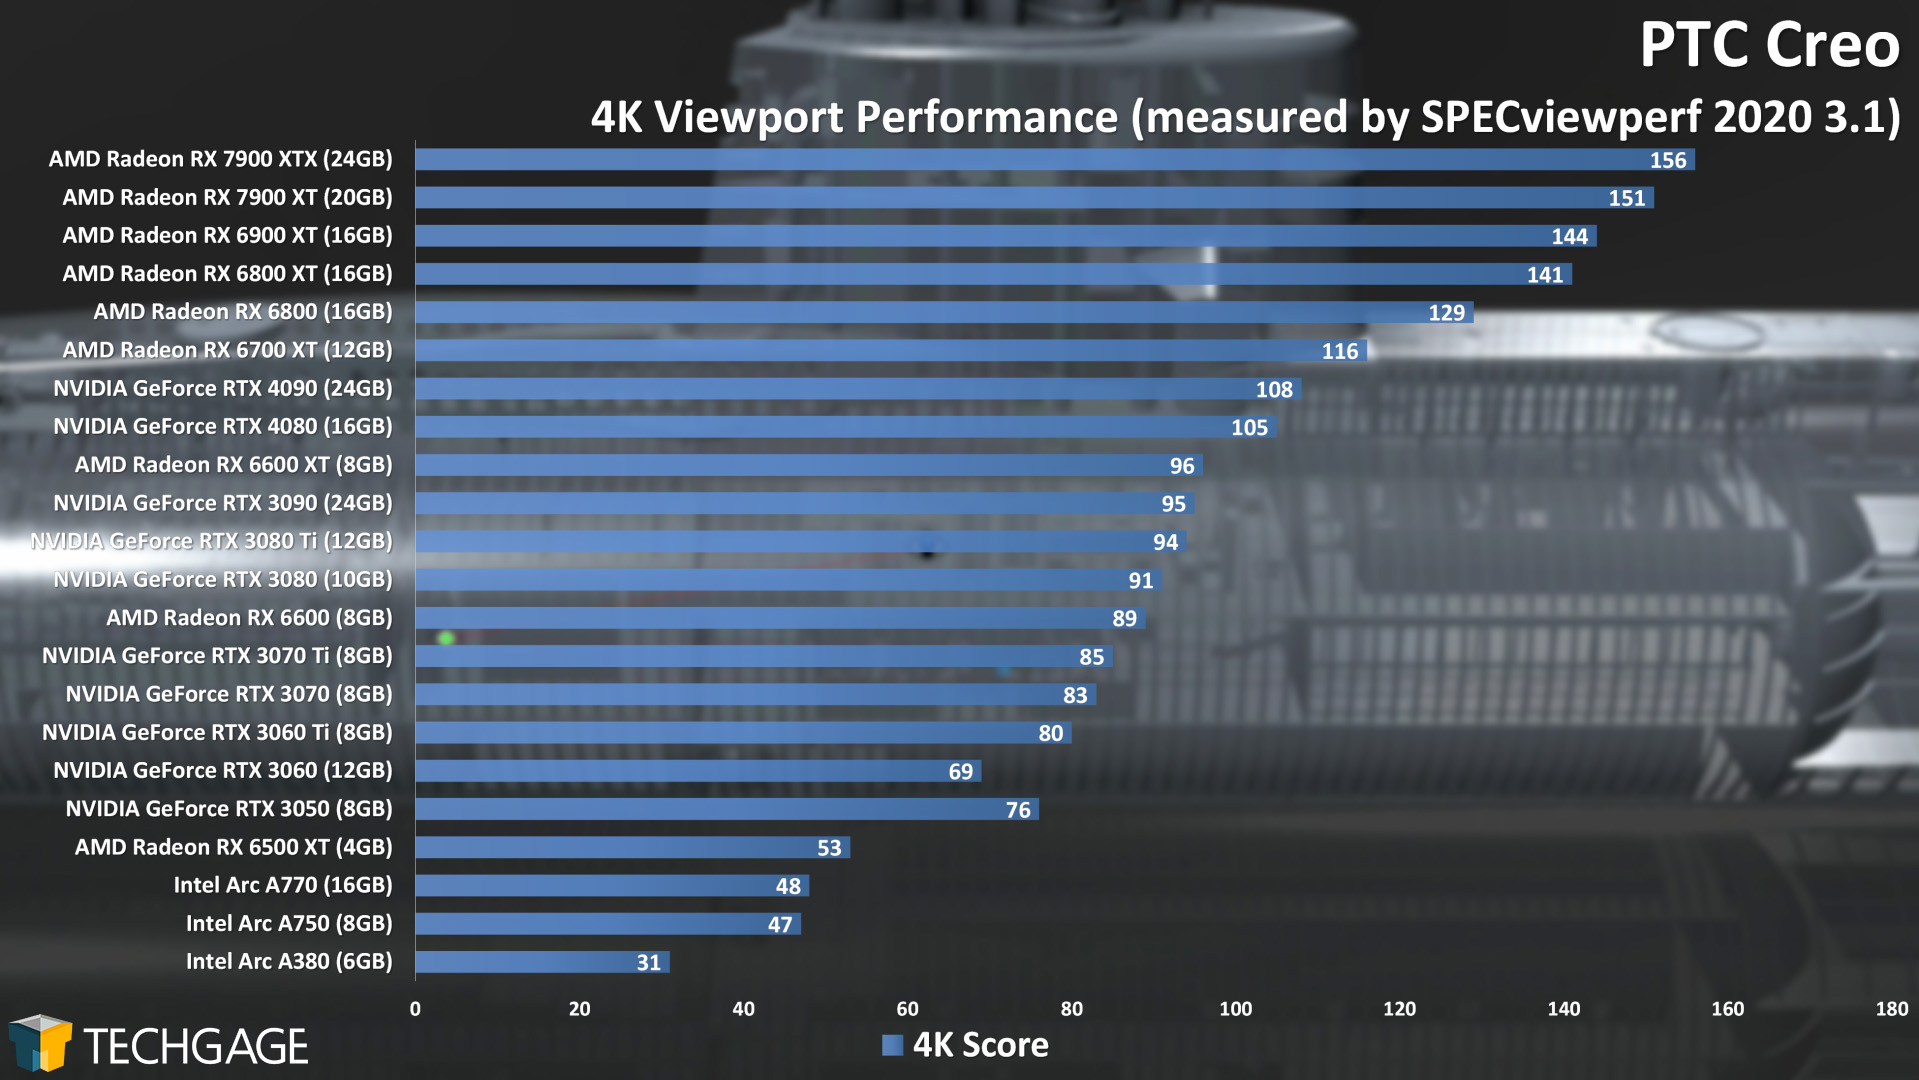 PTC Creo 4K Viewport Performance (AMD Radeon RX 7900 XT and XTX)